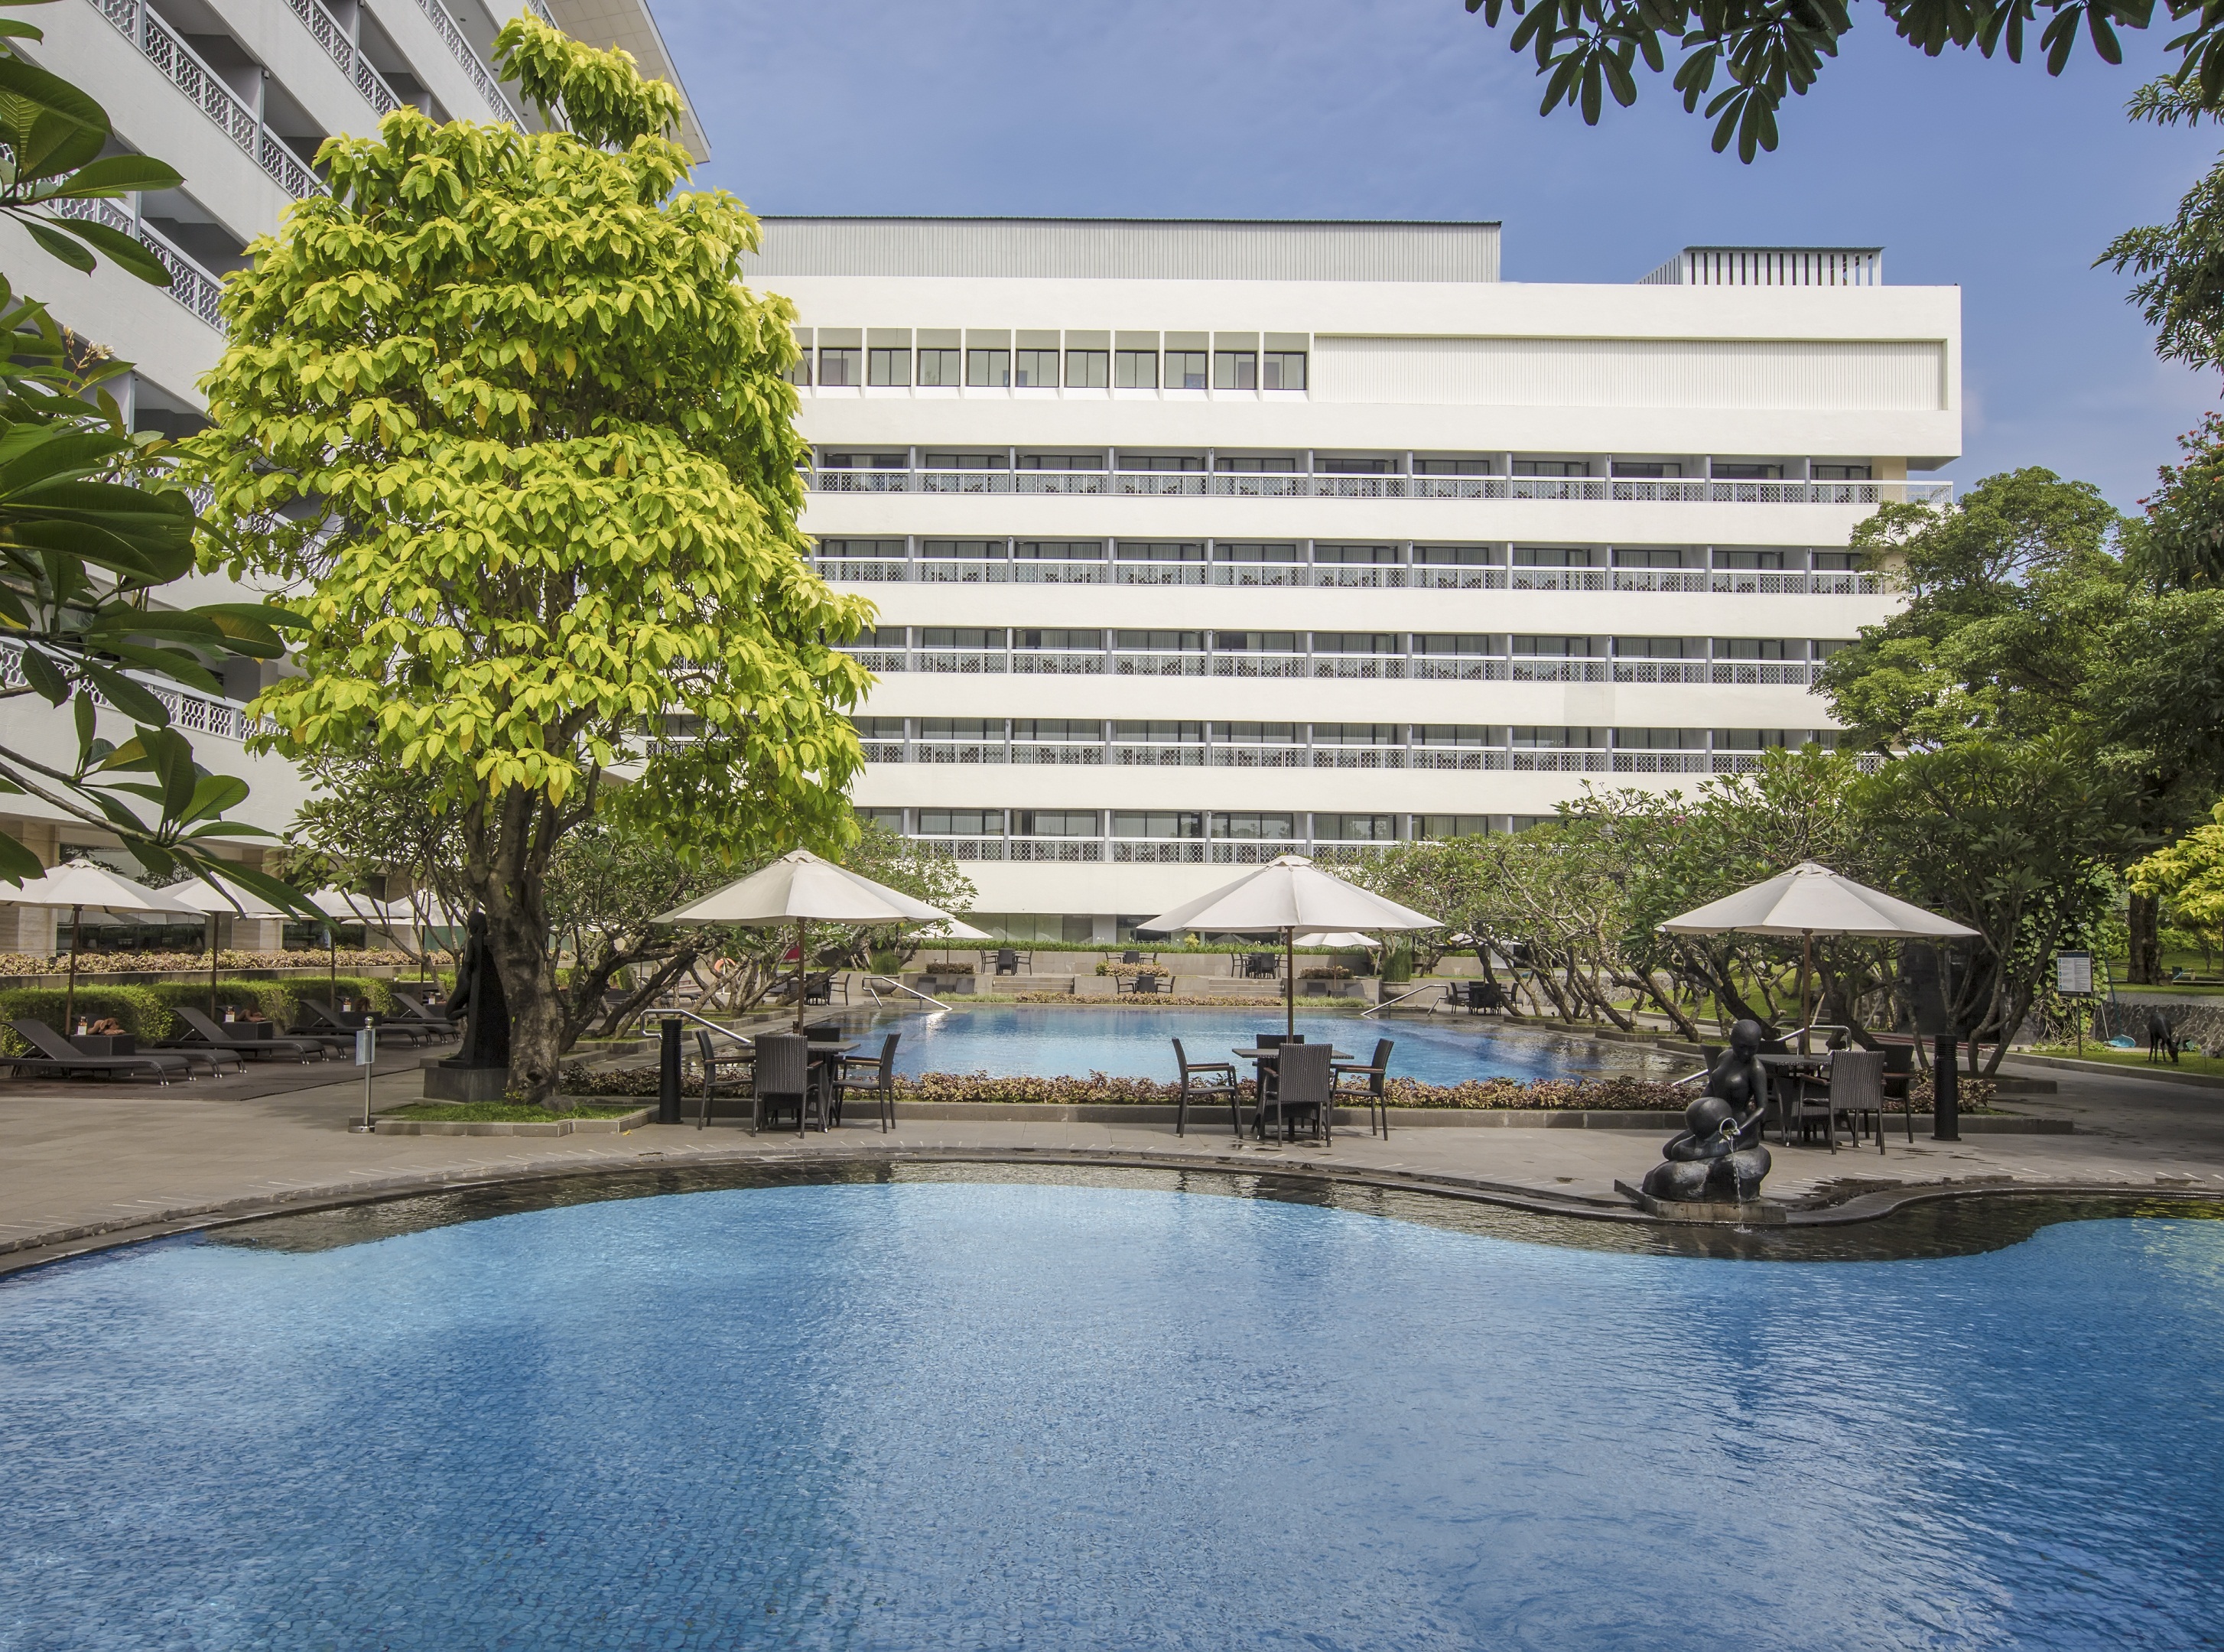 Royal Ambarrukmo hotel and swimming pool area.